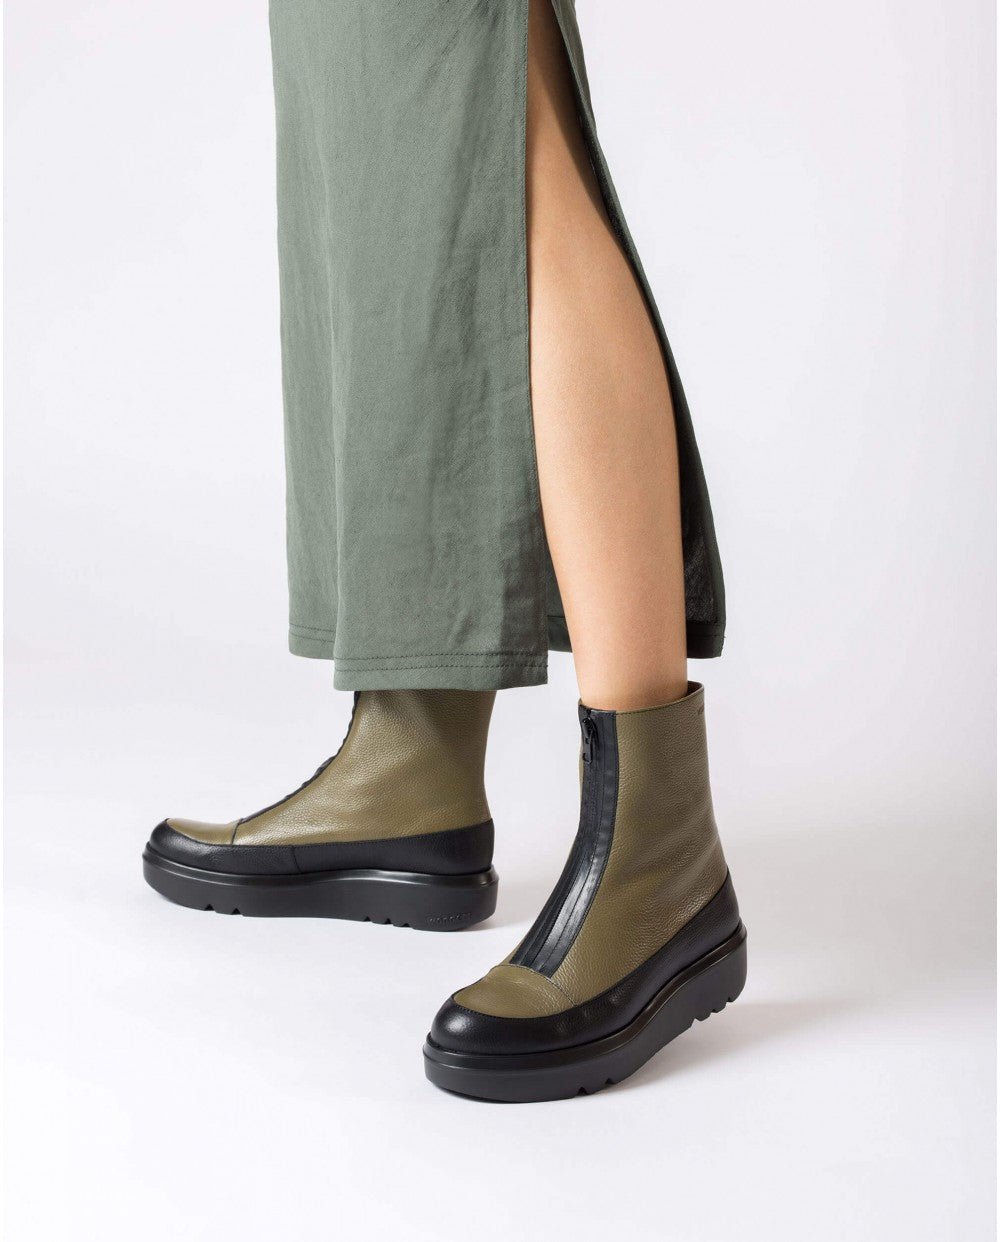 'Livia' women's boot - Green - Chaplinshoes'Livia' women's boot - GreenWonders